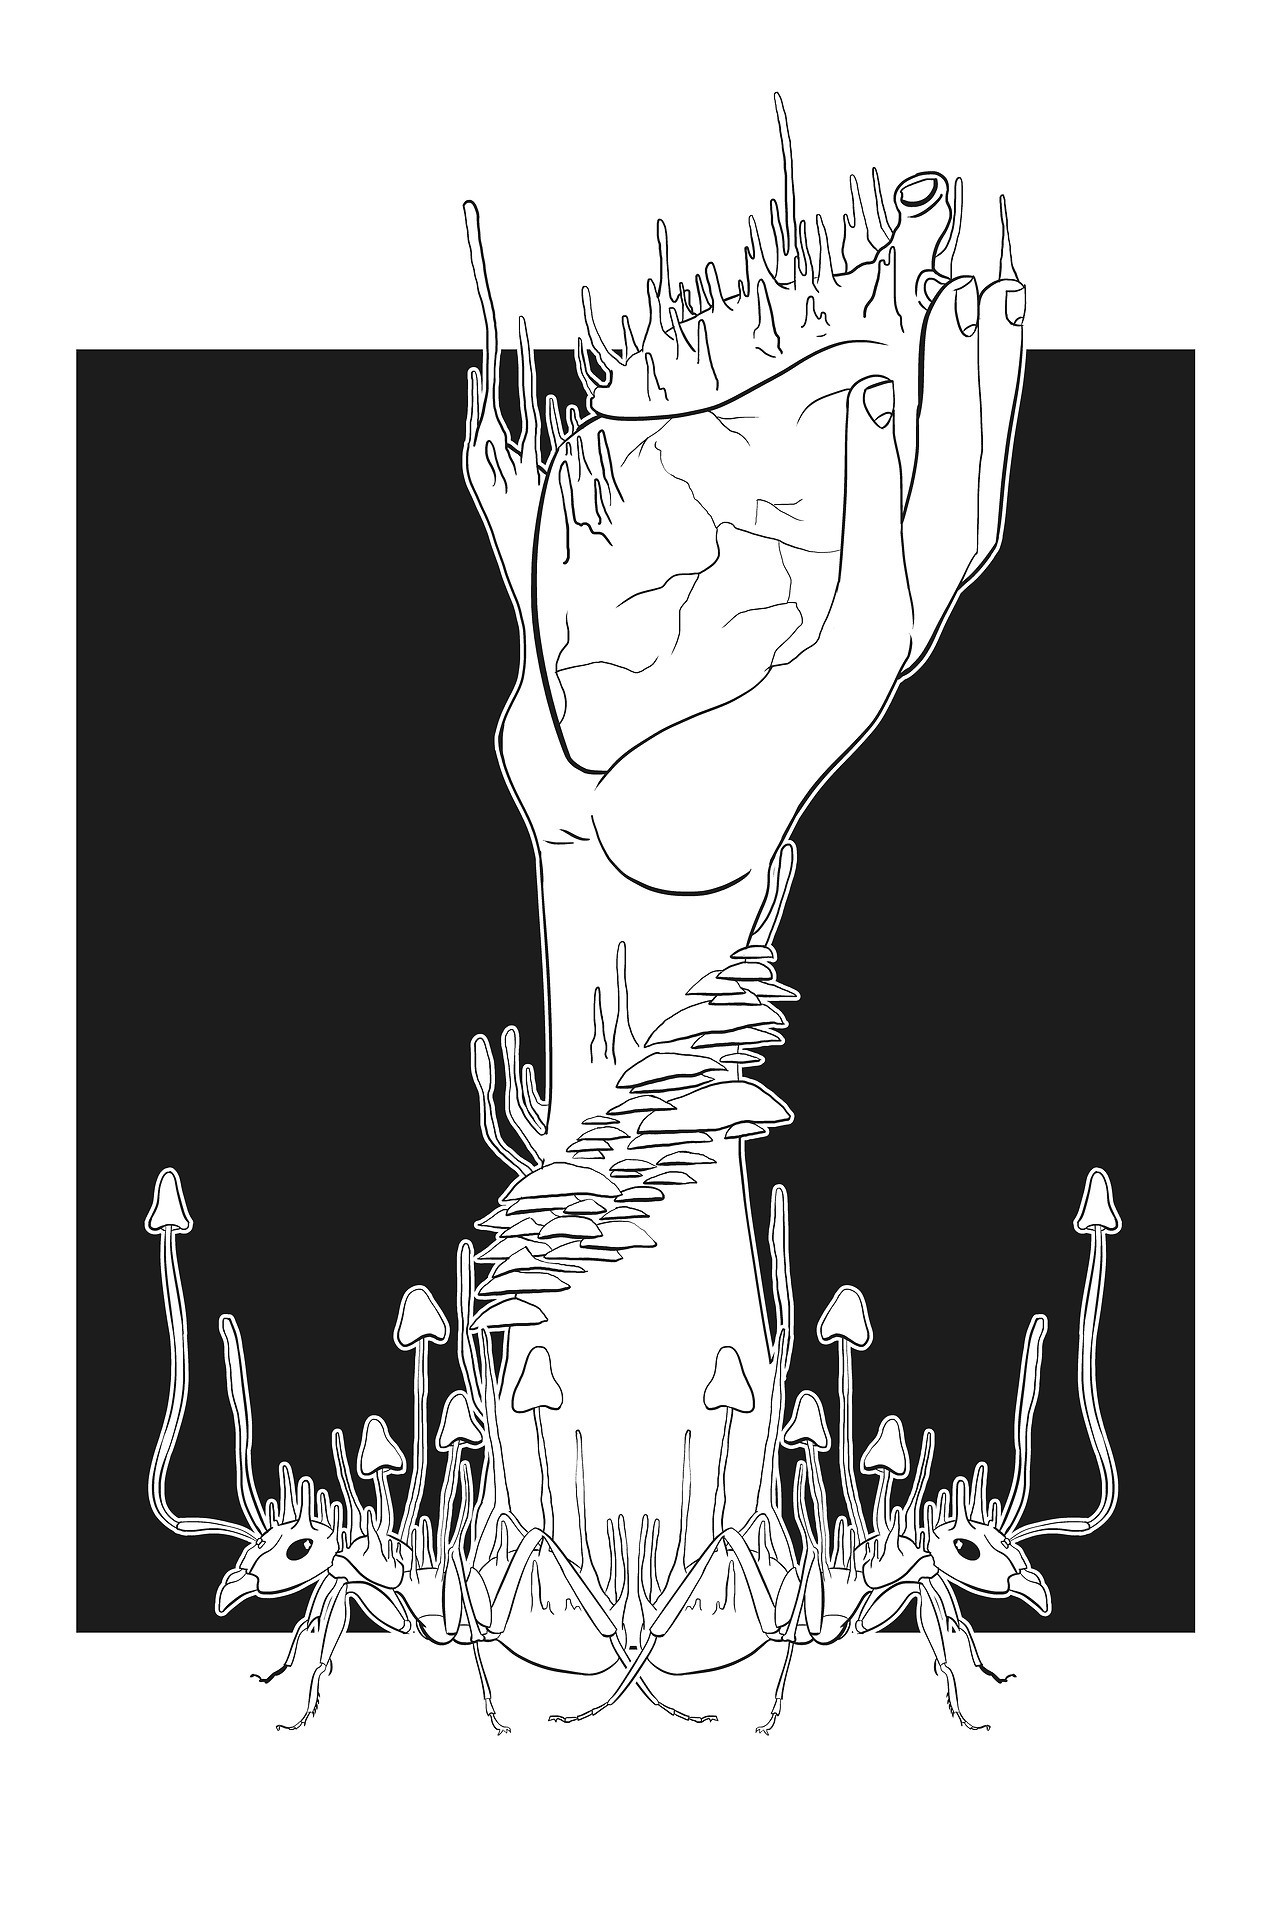 Heartache (Digital Illustration, Inks)